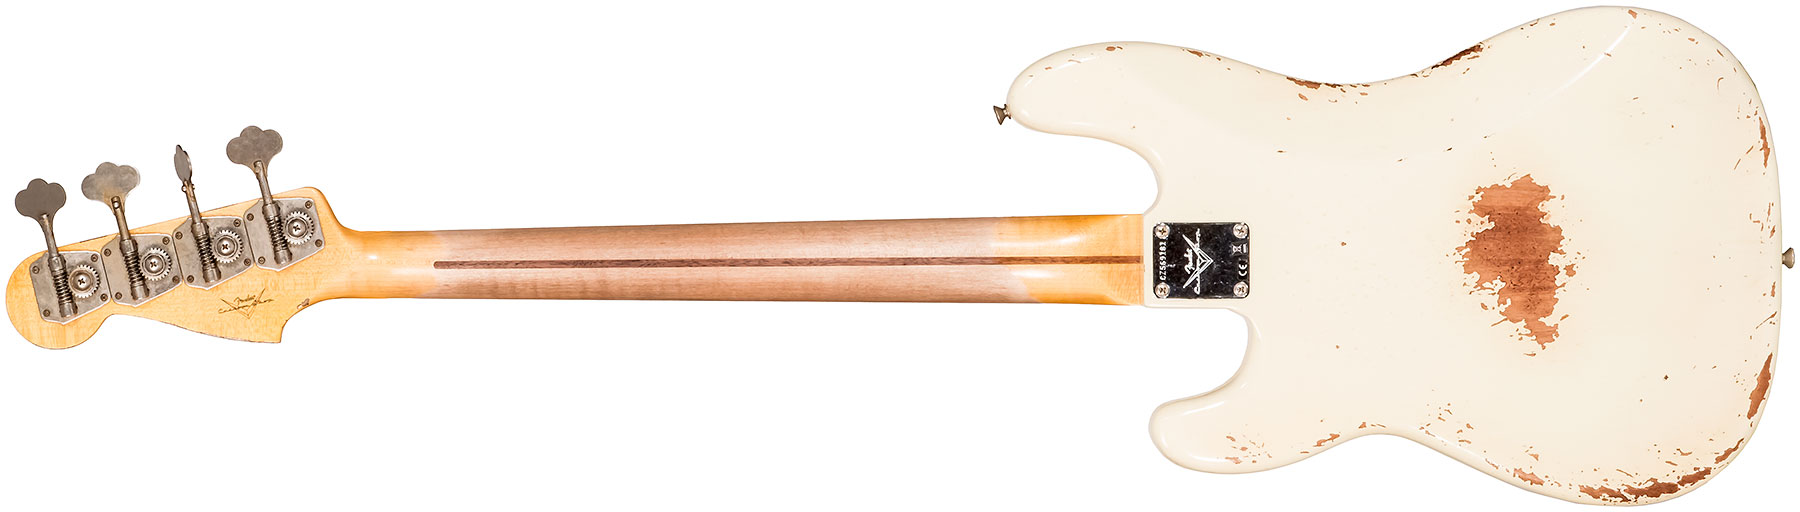 Fender Custom Shop Precision Bass 1958 Mn #cz569181 - Heavy Relic Vintage White - Solidbody E-bass - Variation 1